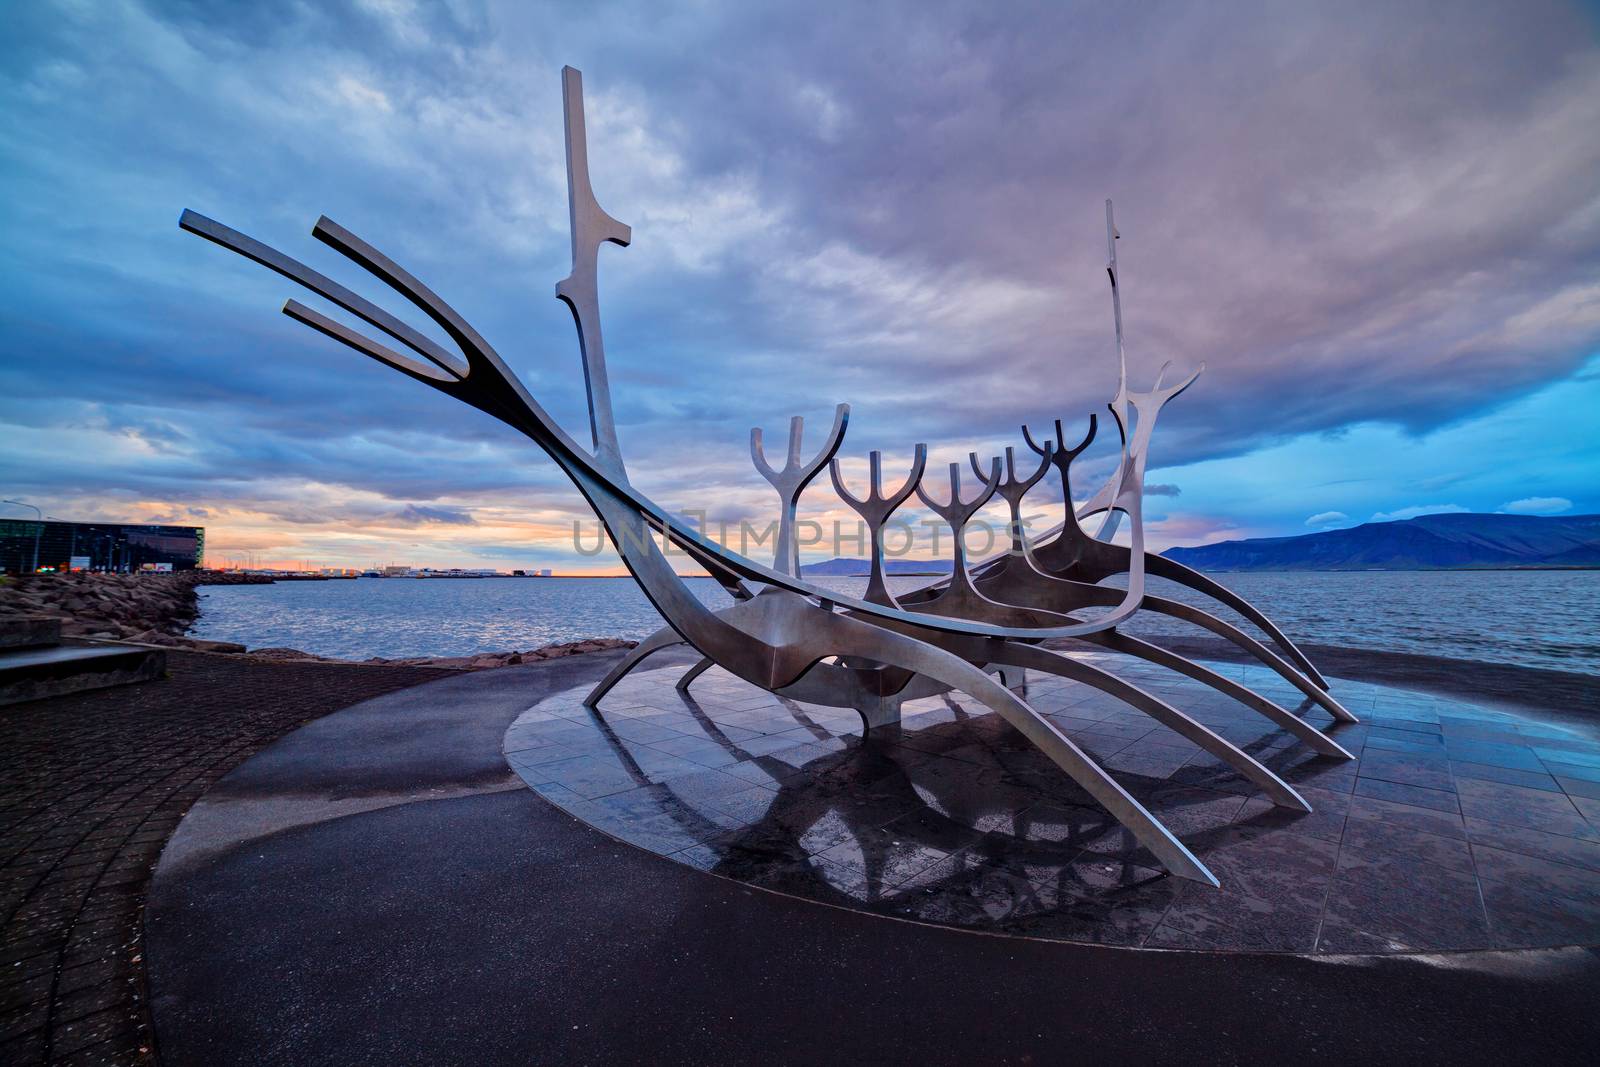 Solfar Suncraft monument in Reykjavik on Iceland